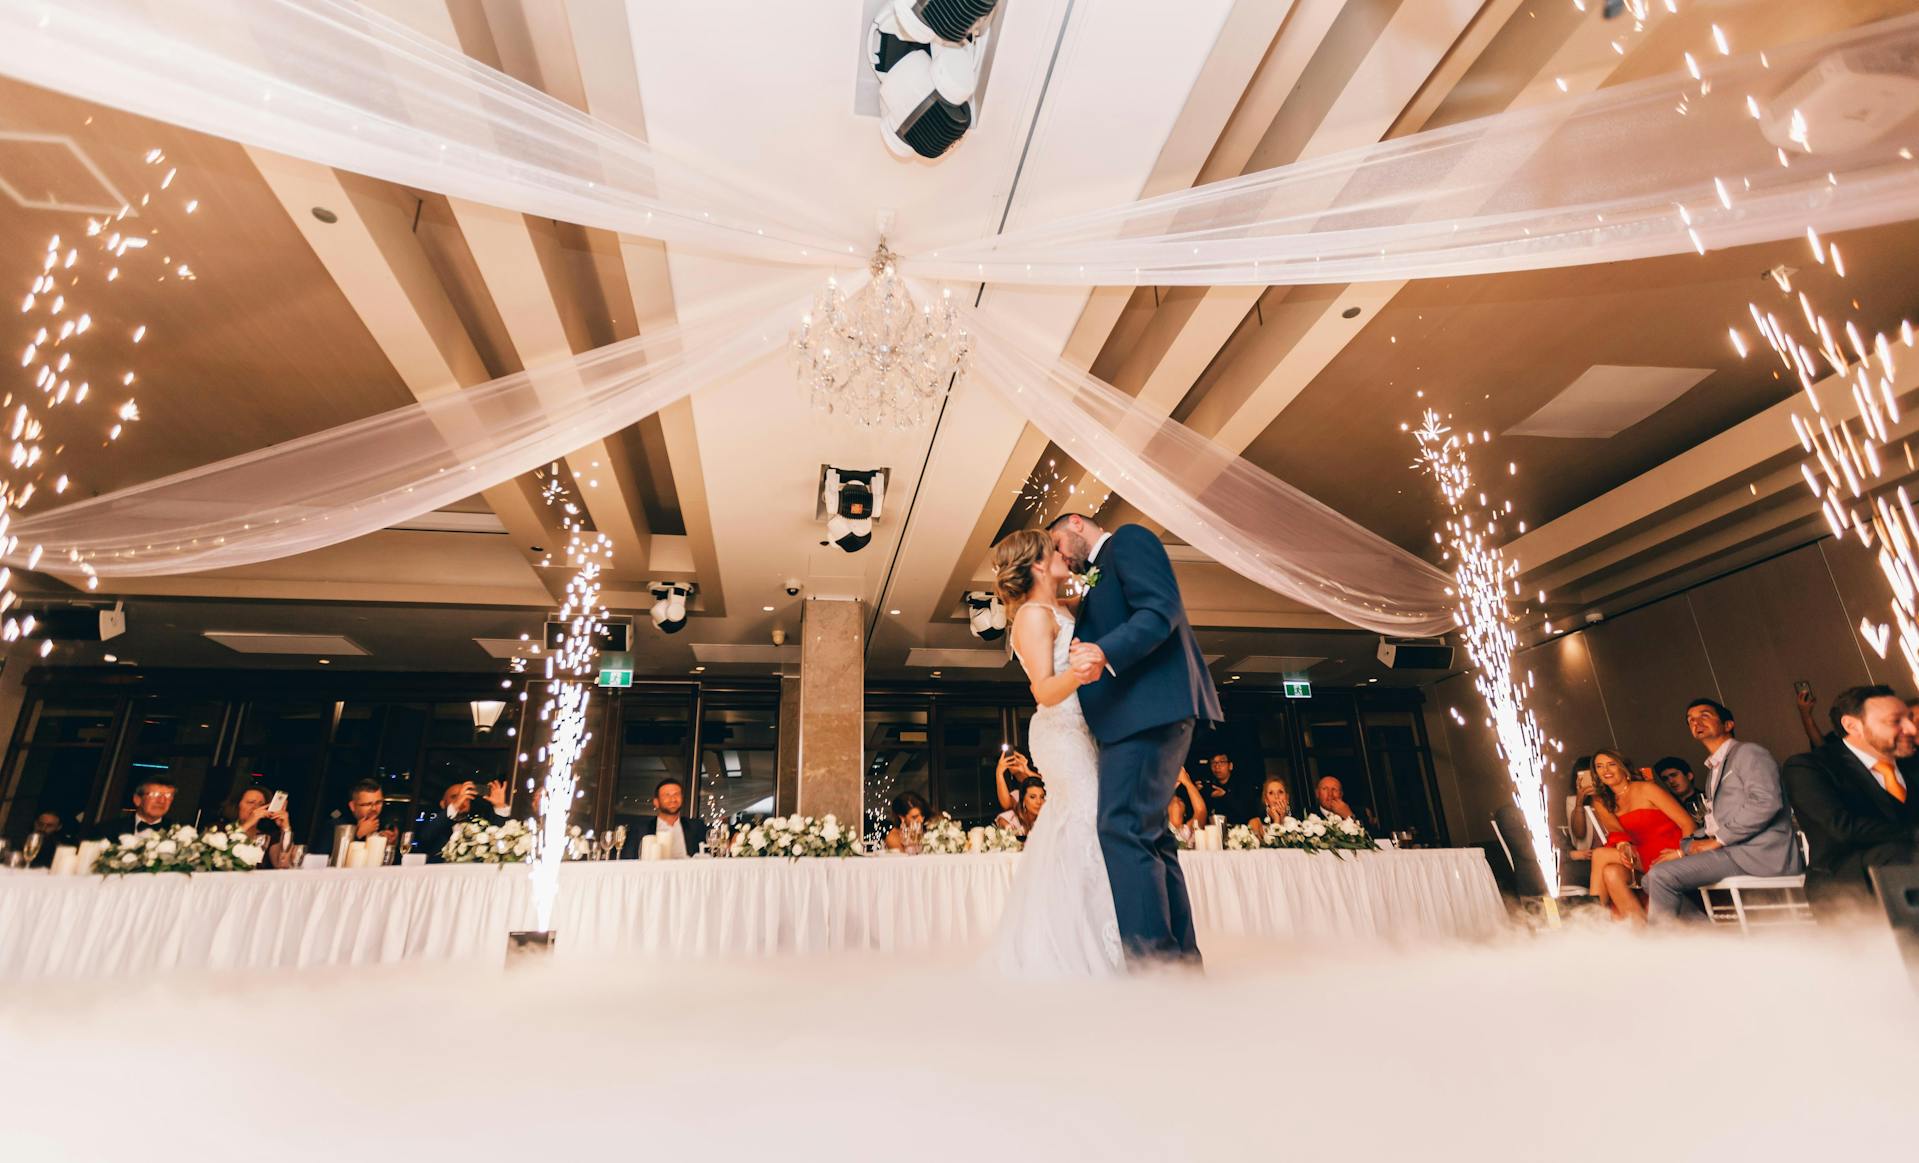 A bridal couple dancing at wedding reception | Source: Pexels